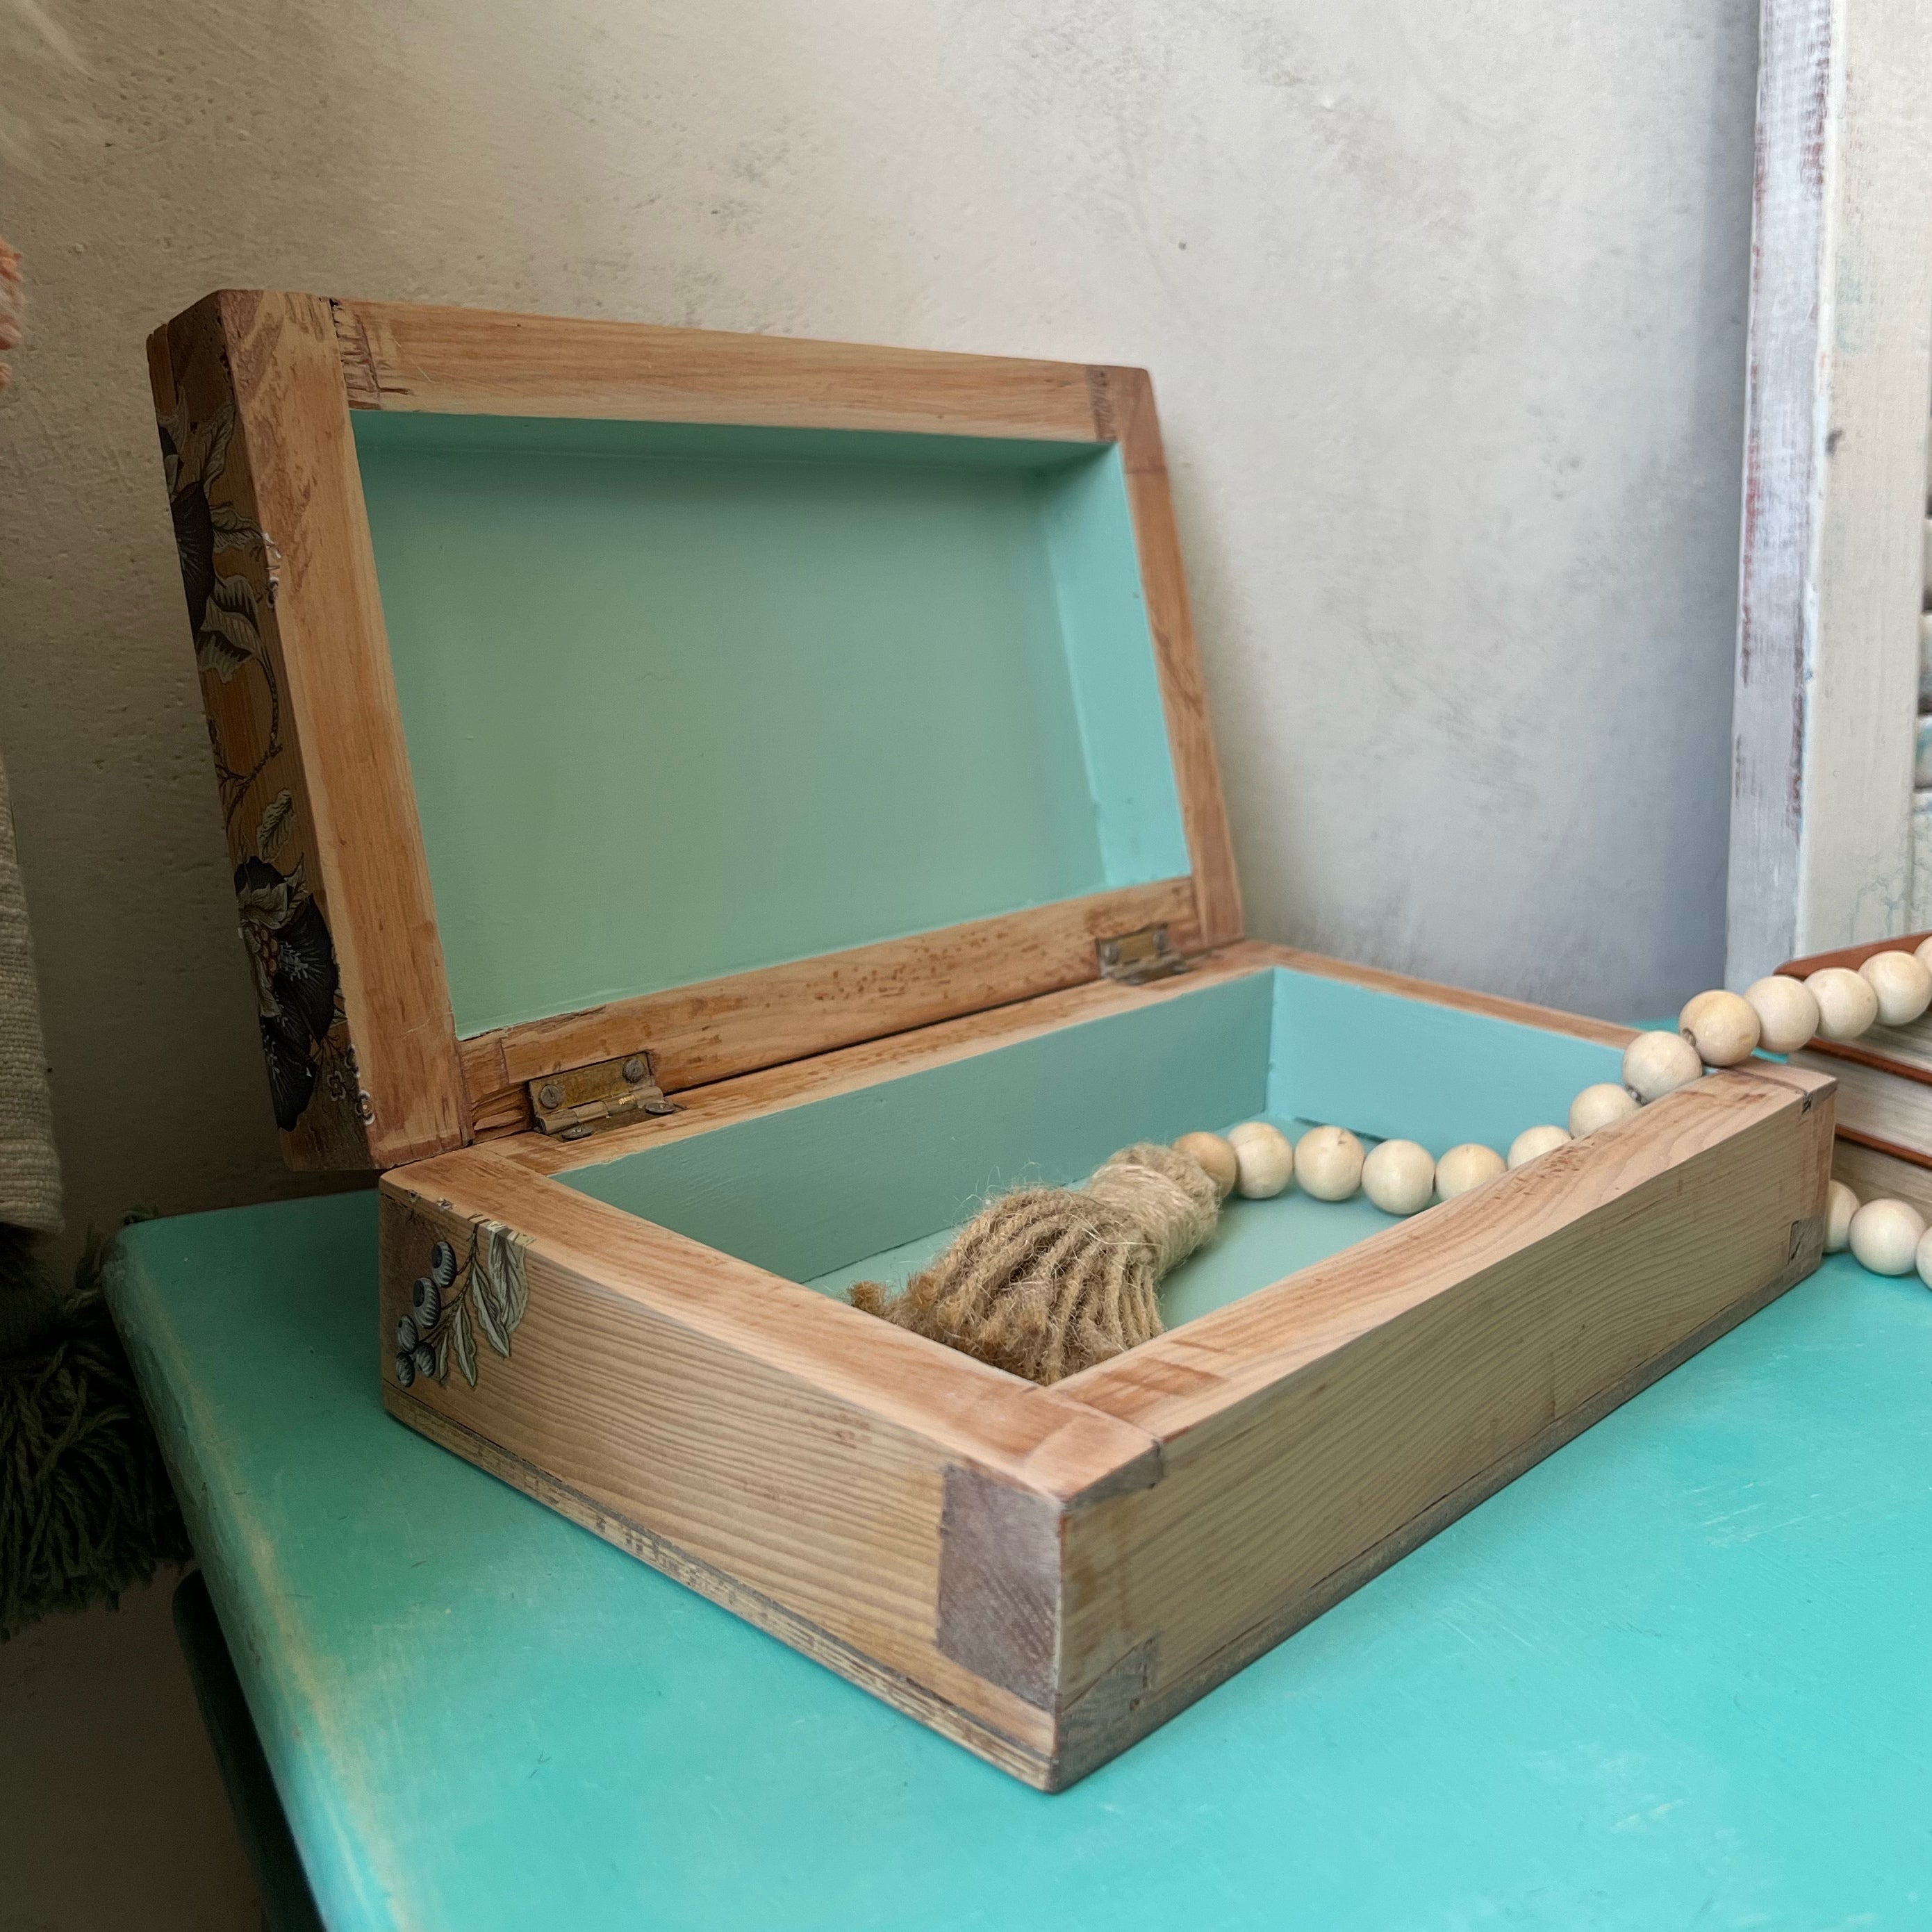 Vintage wooden trinket box